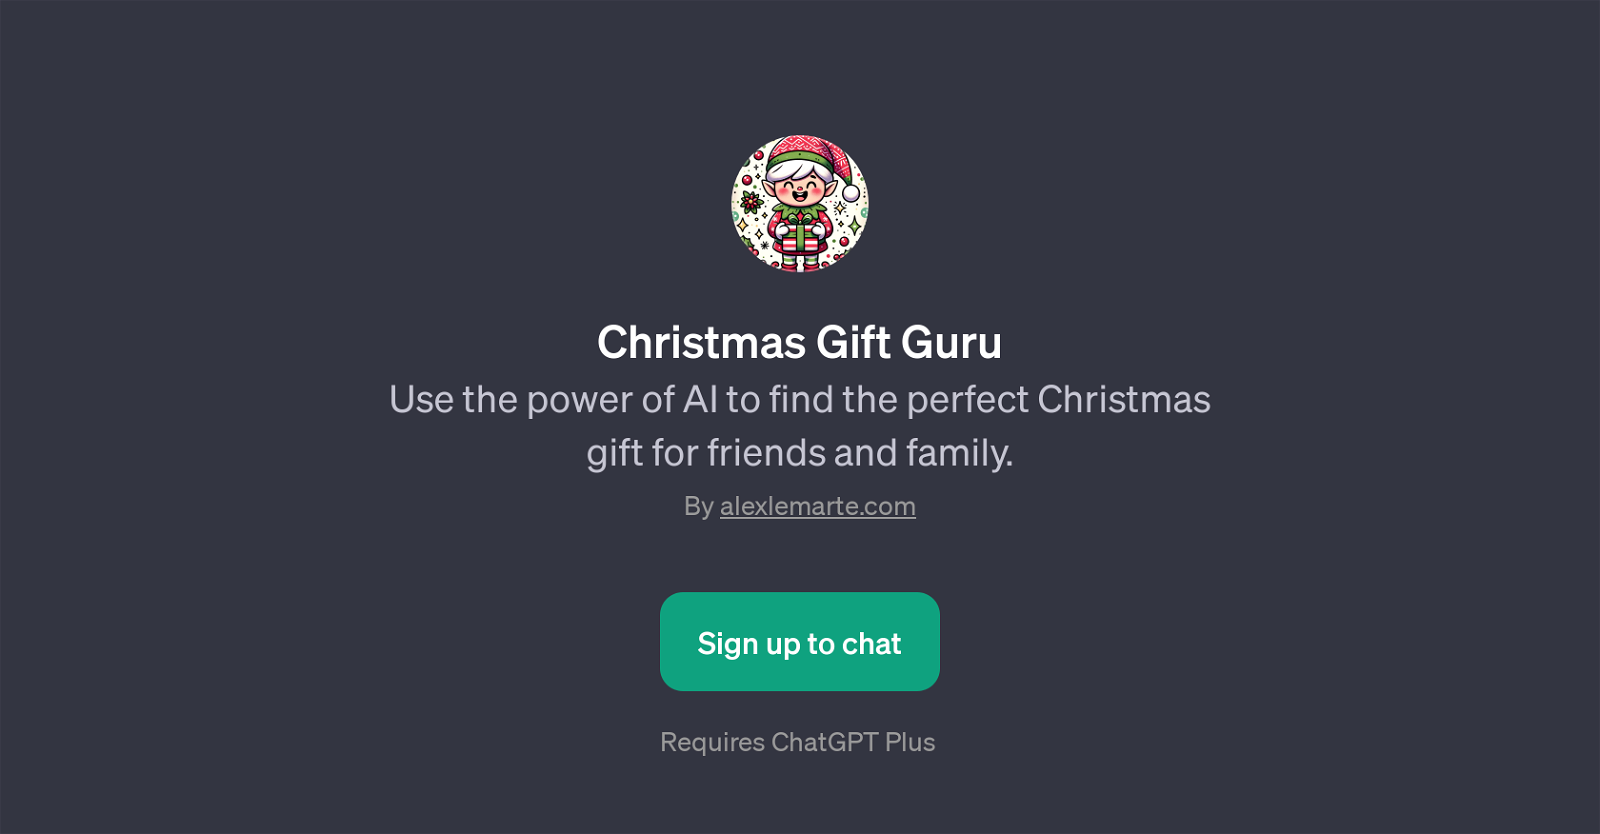 Christmas Gift Guru website